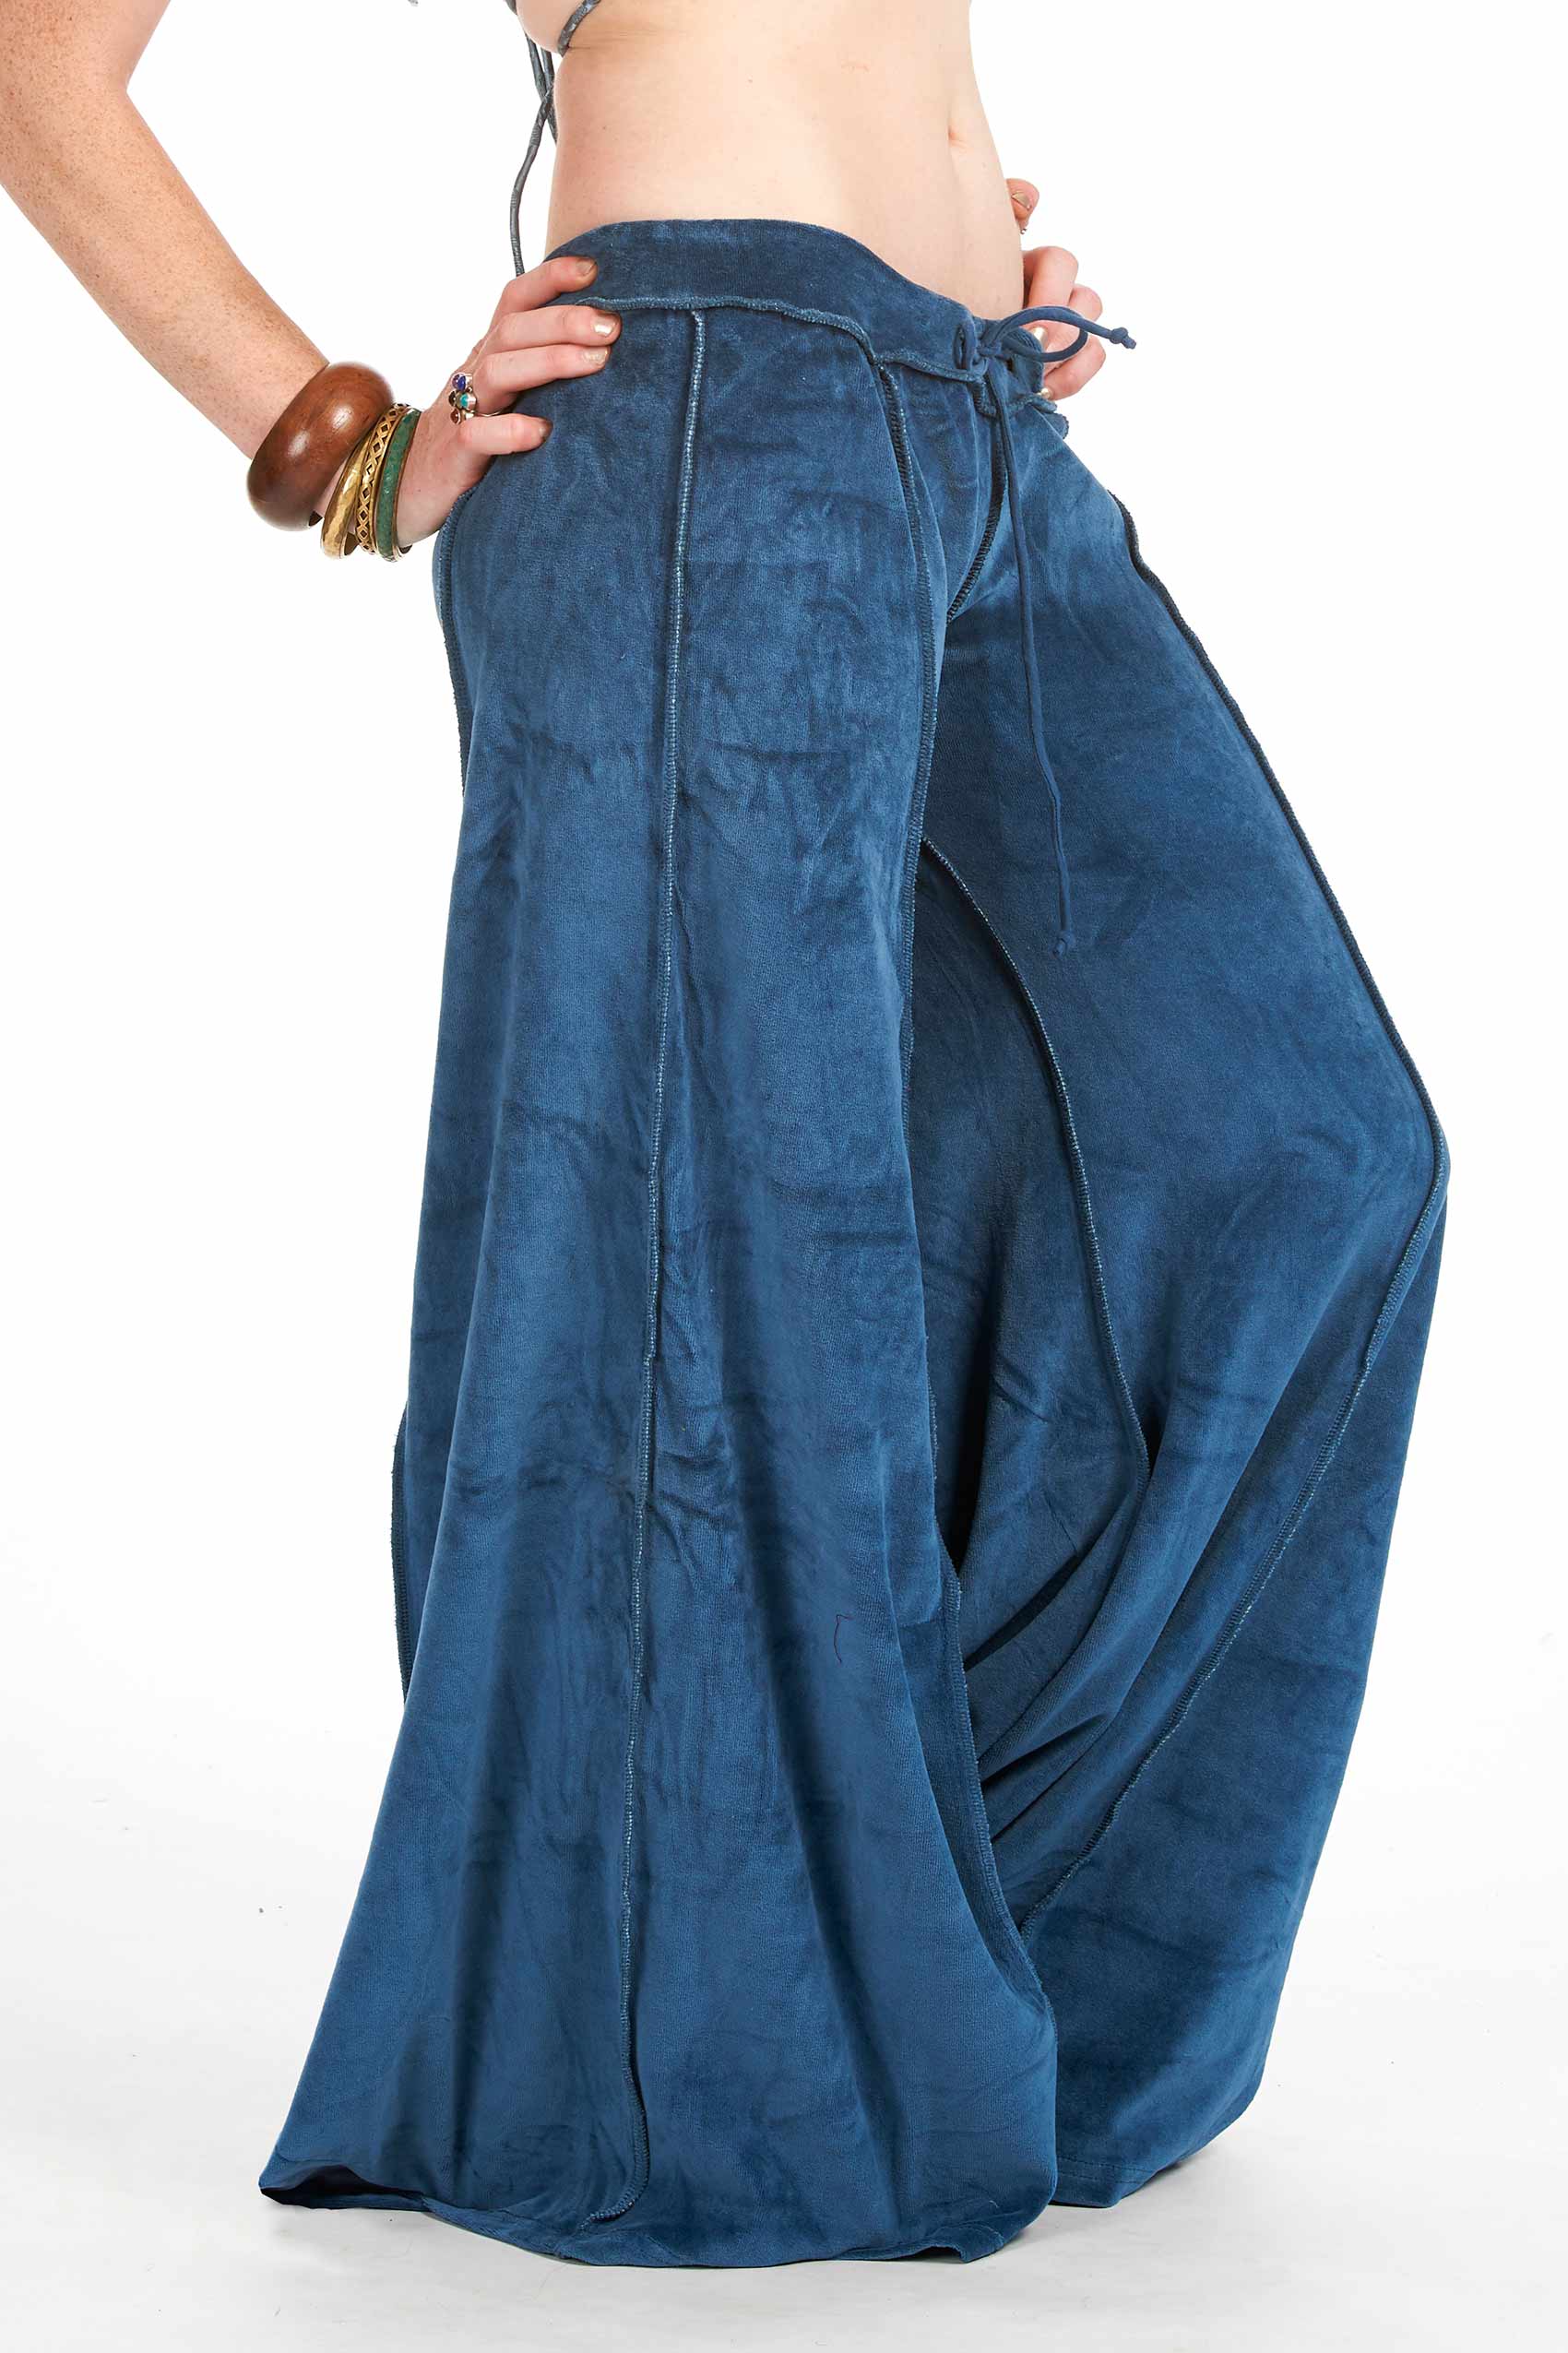 Velvet Flow Pants, extra-wide long bellydance trousers